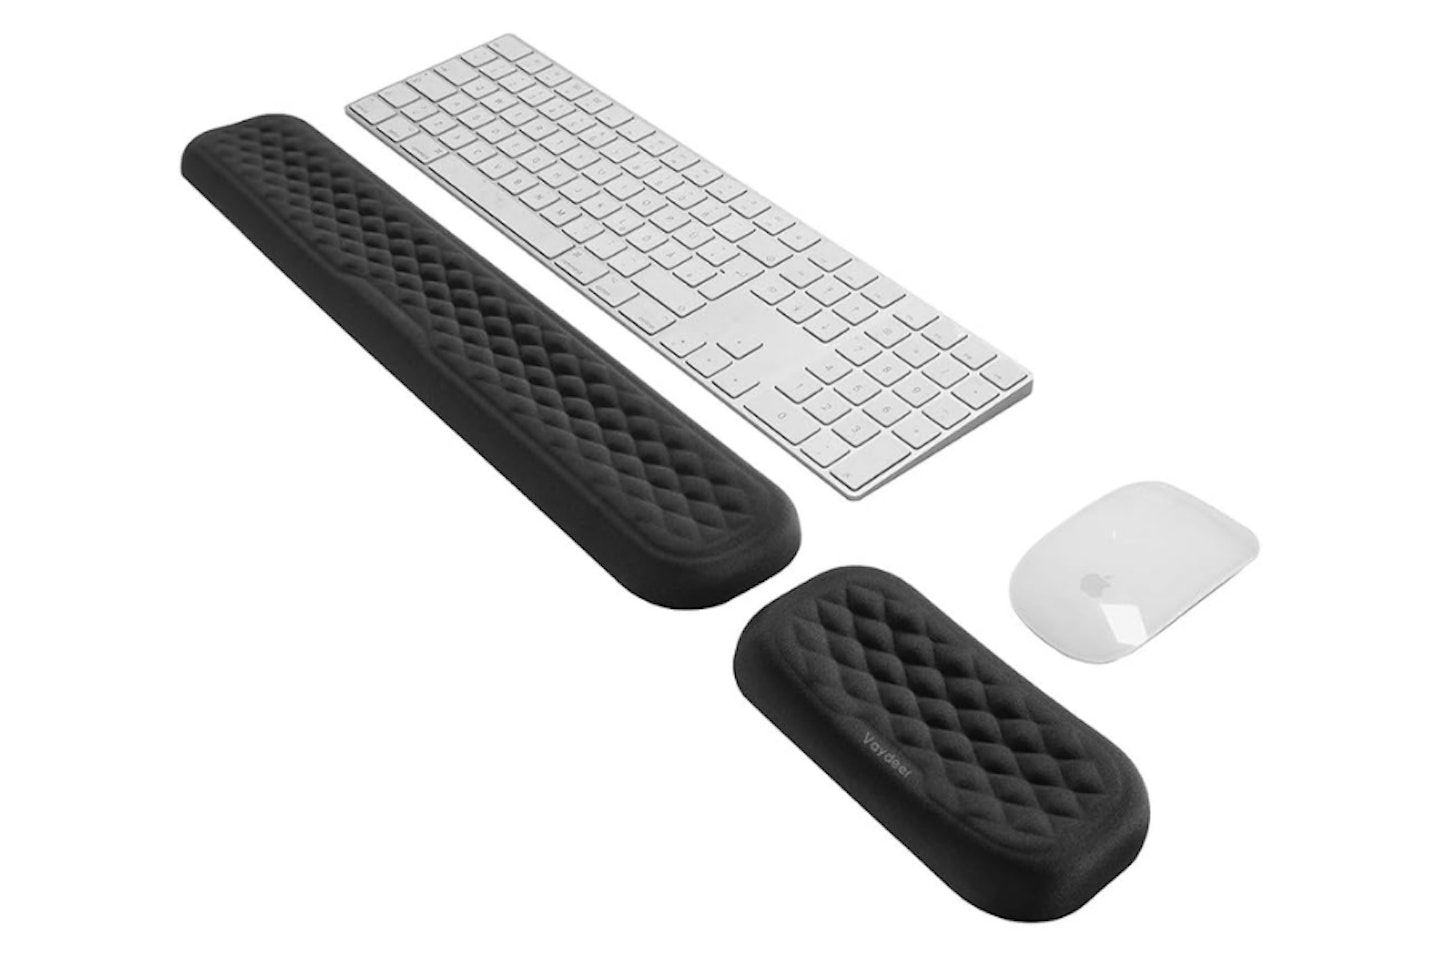 VAYDEER Keyboard and Mouse Wrist Rest  - possibly the best keyboard wrist rest